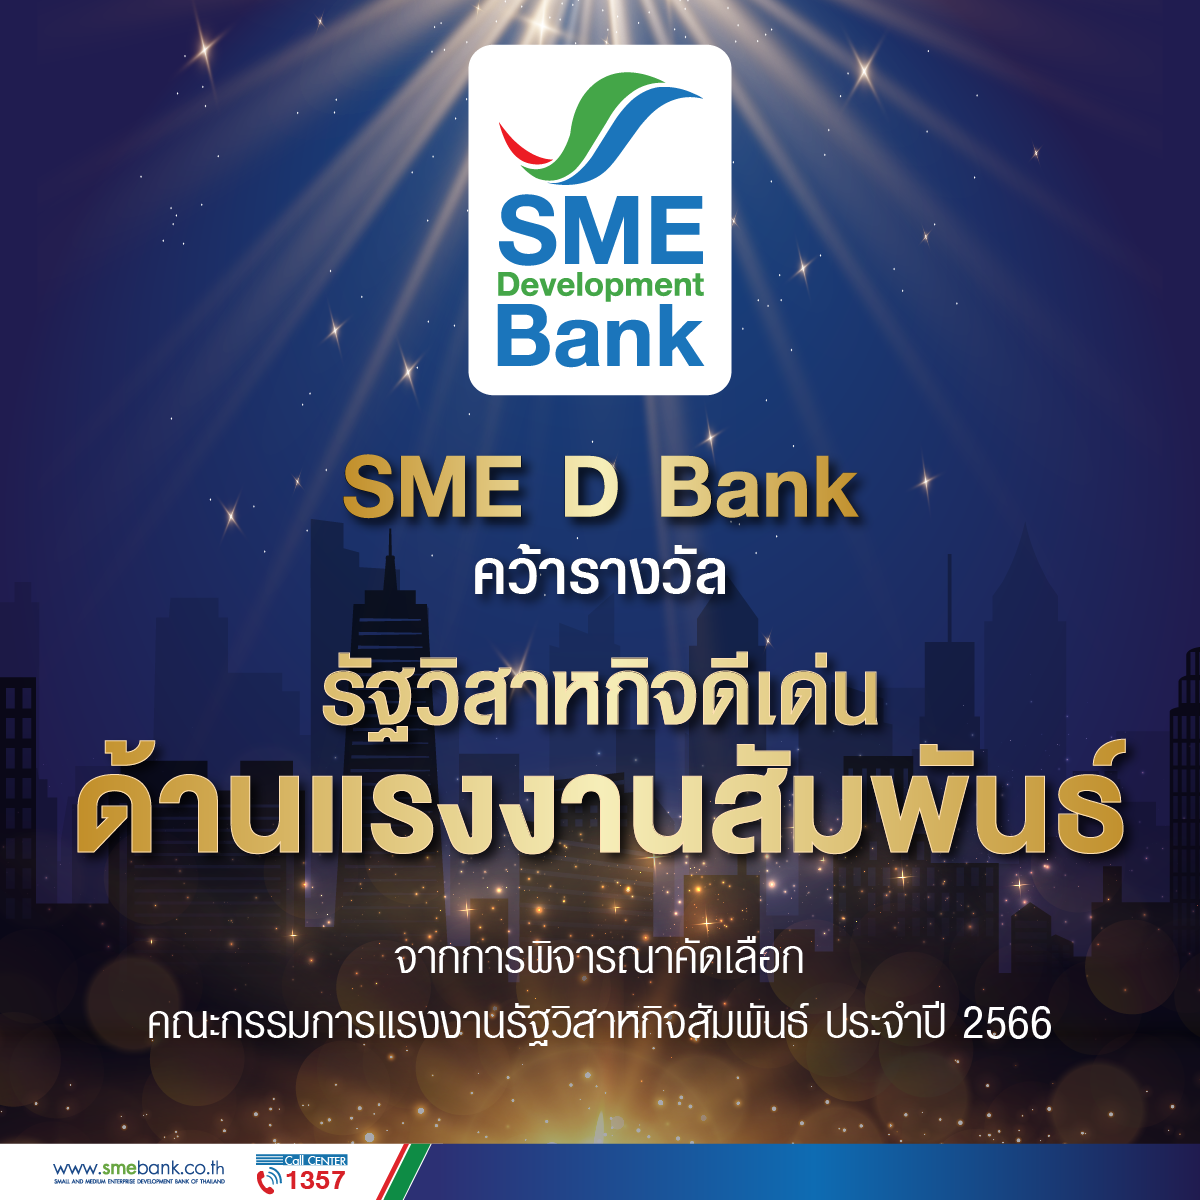 SME D Bank คว้ารางวัล "รัฐวิสาหกิจดีเด่นด้านแรงงานสัมพันธ์" ประจำปี 2566 ผลสำเร็จจากการยกระดับคุณภาพชีวิตและให้คุณค่าแก่พนักงานอย่างต่อเนื่อง